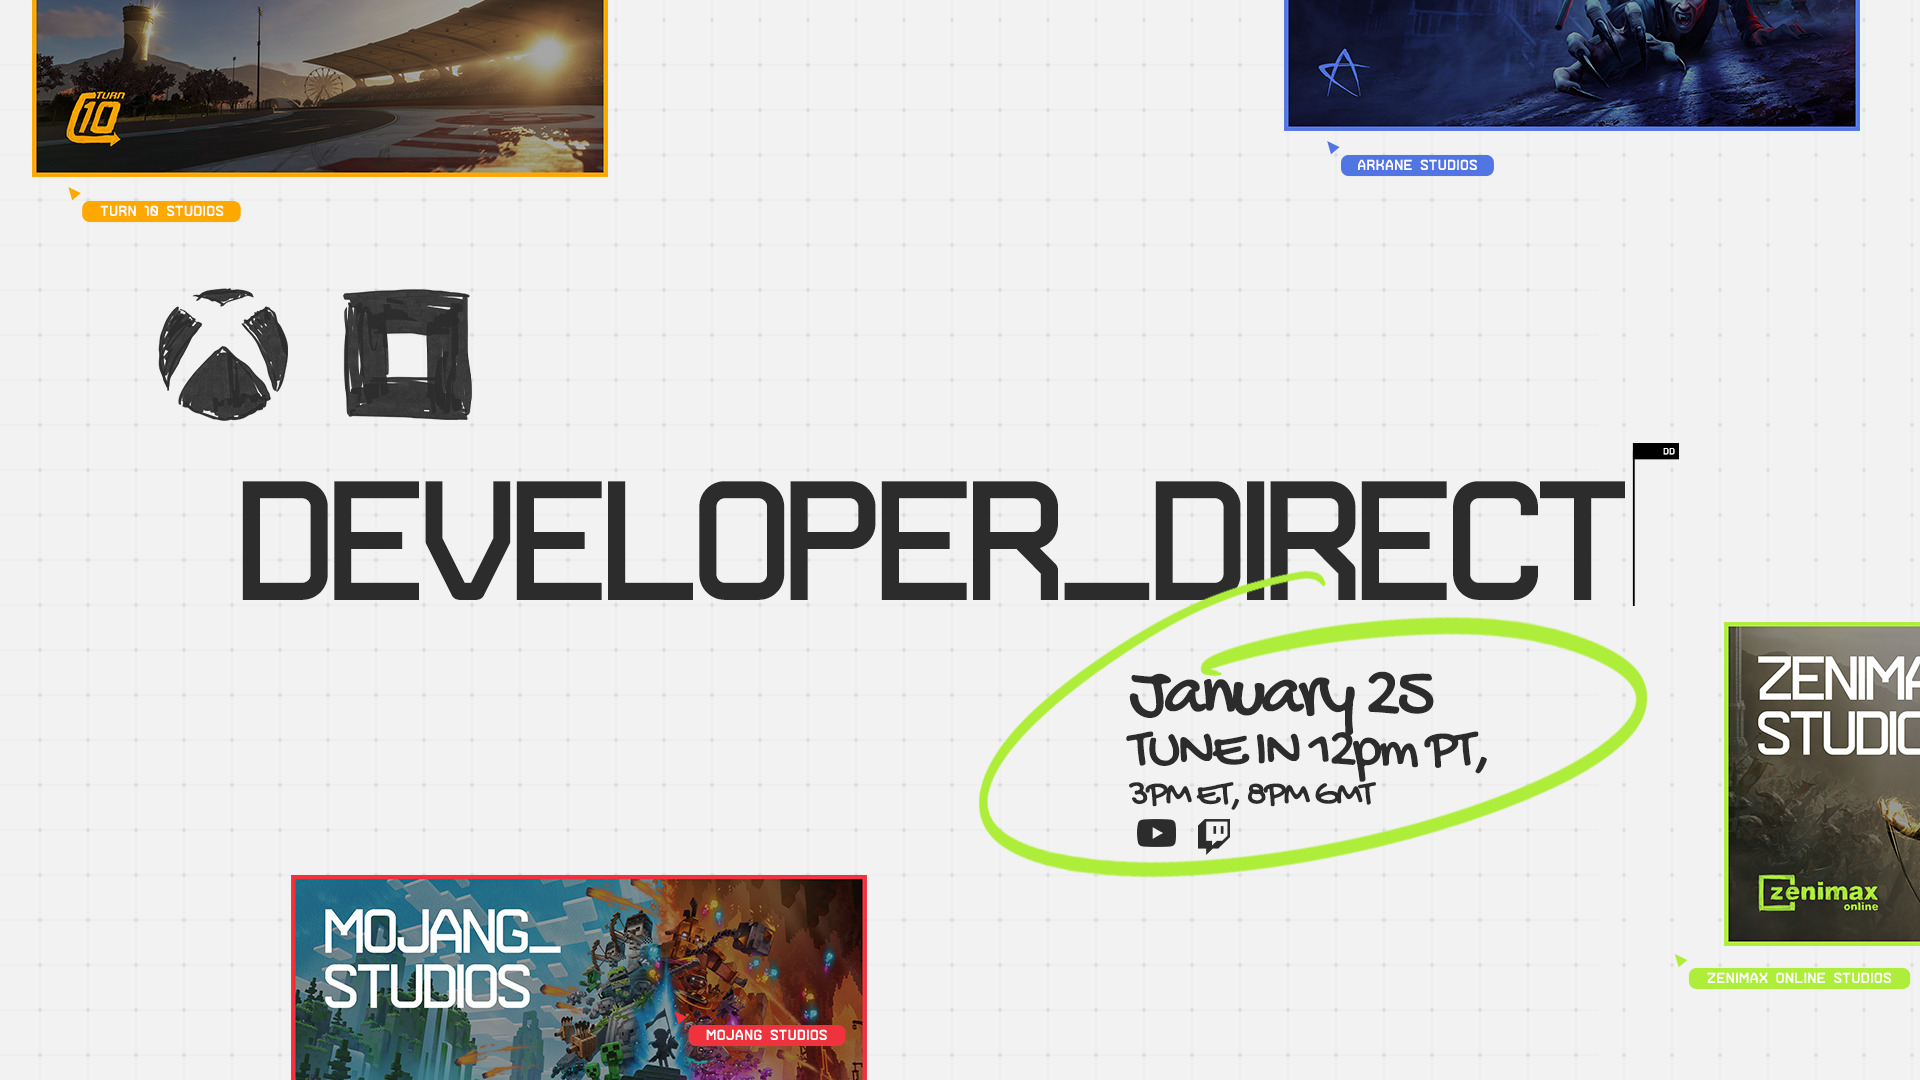 #
      Xbox and Bethesda Softworks Developer_Direct live stream set for January 25